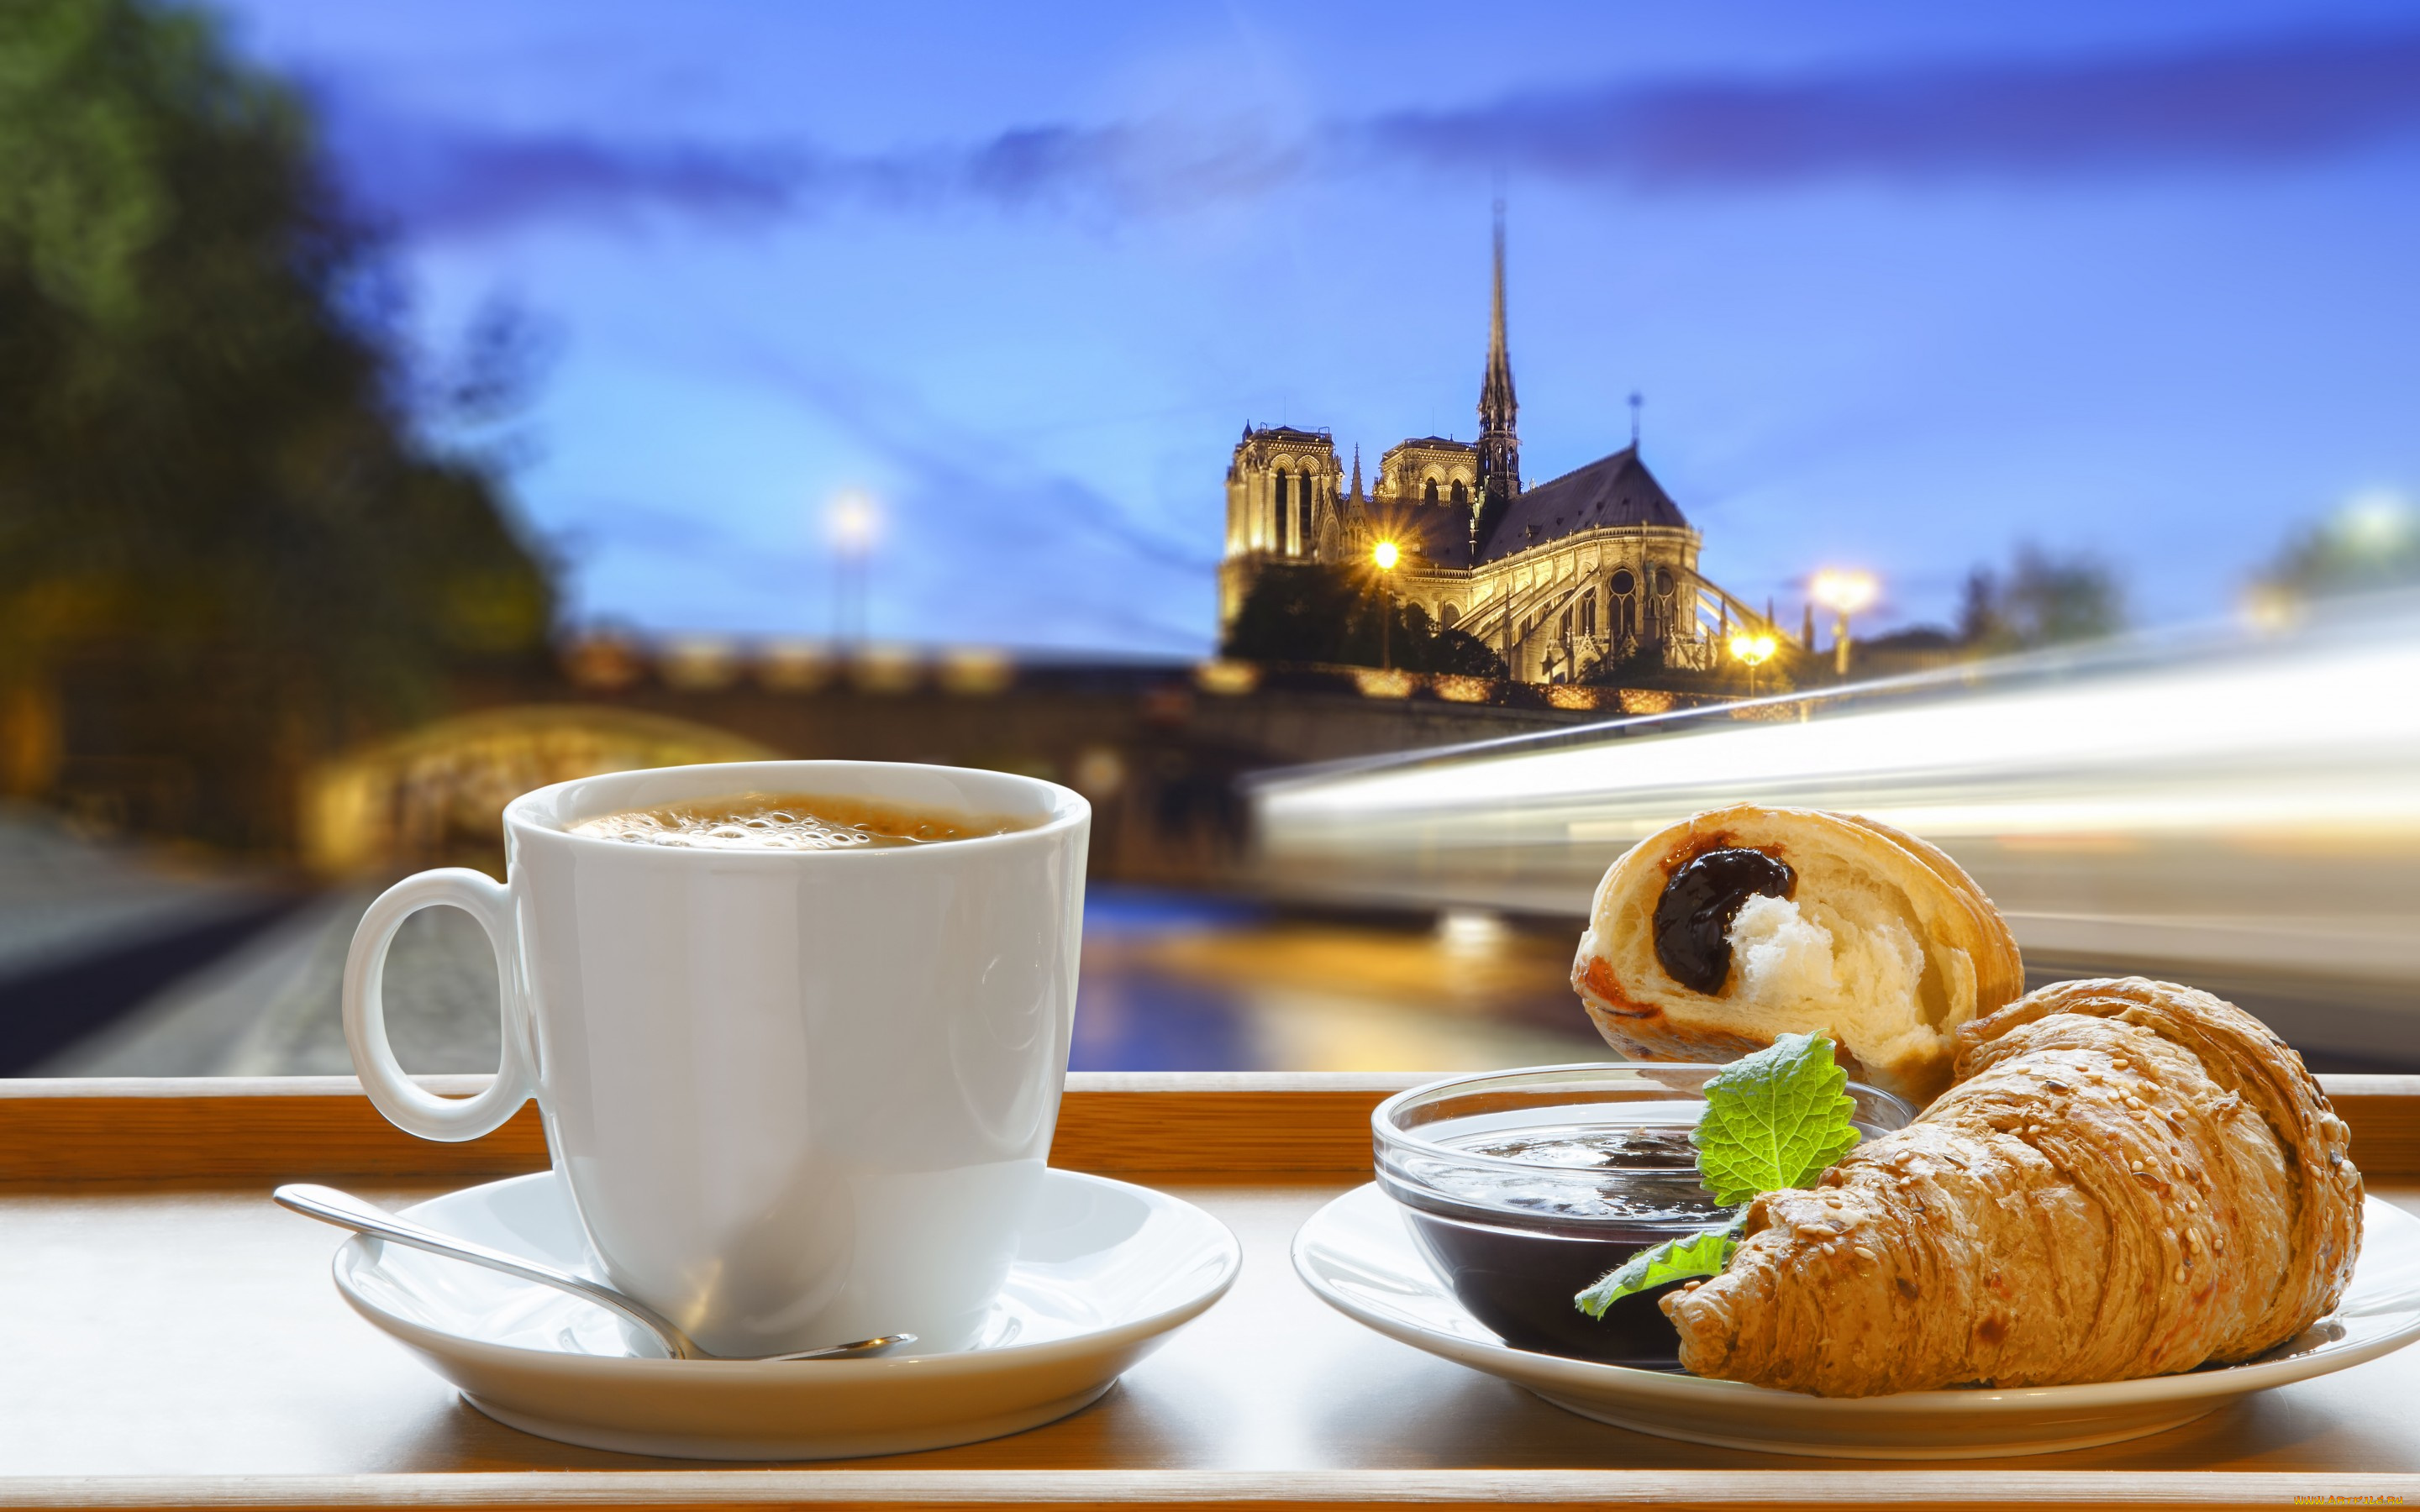 еда, кофе, , кофейные, зёрна, париж, джем, круассан, завтрак, cathedral, notre, dame, город, croissant, cup, coffee, breakfast, france, paris